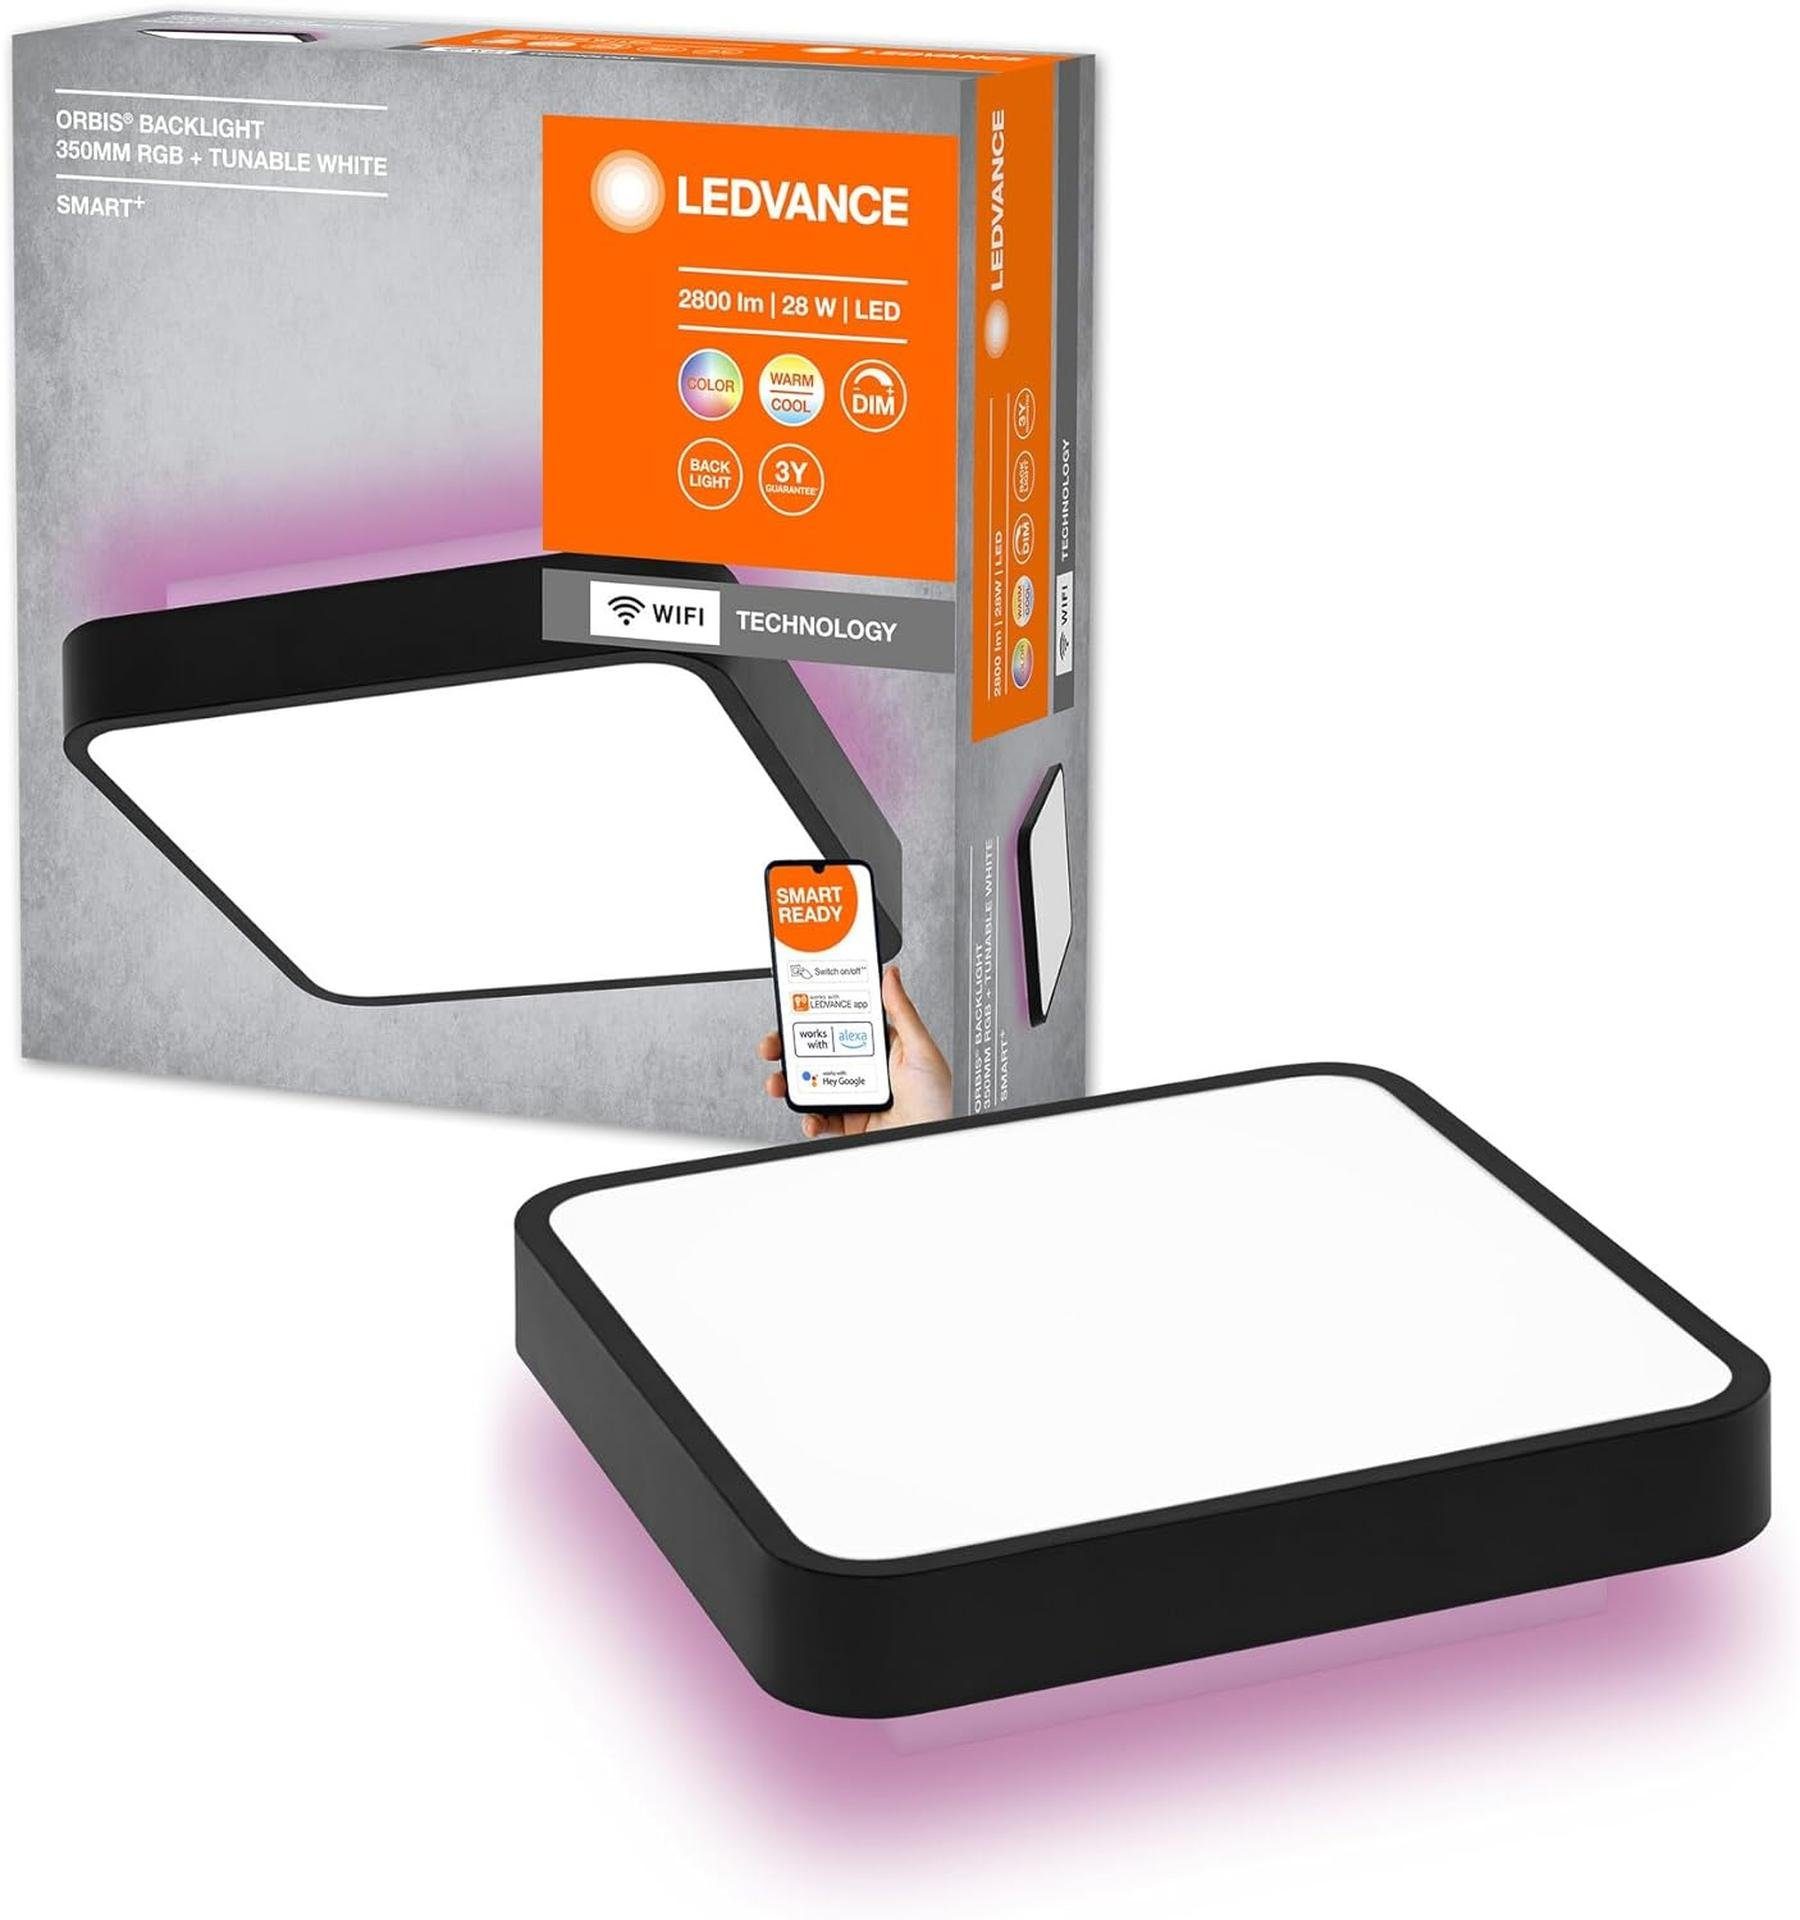 Ledvance LED Deckenleuchte Ledvance Led orbis Backlite Square Dimmbare Smart Wifi RGB 28W 2400lm, RGB, dimmbar | Deckenlampen